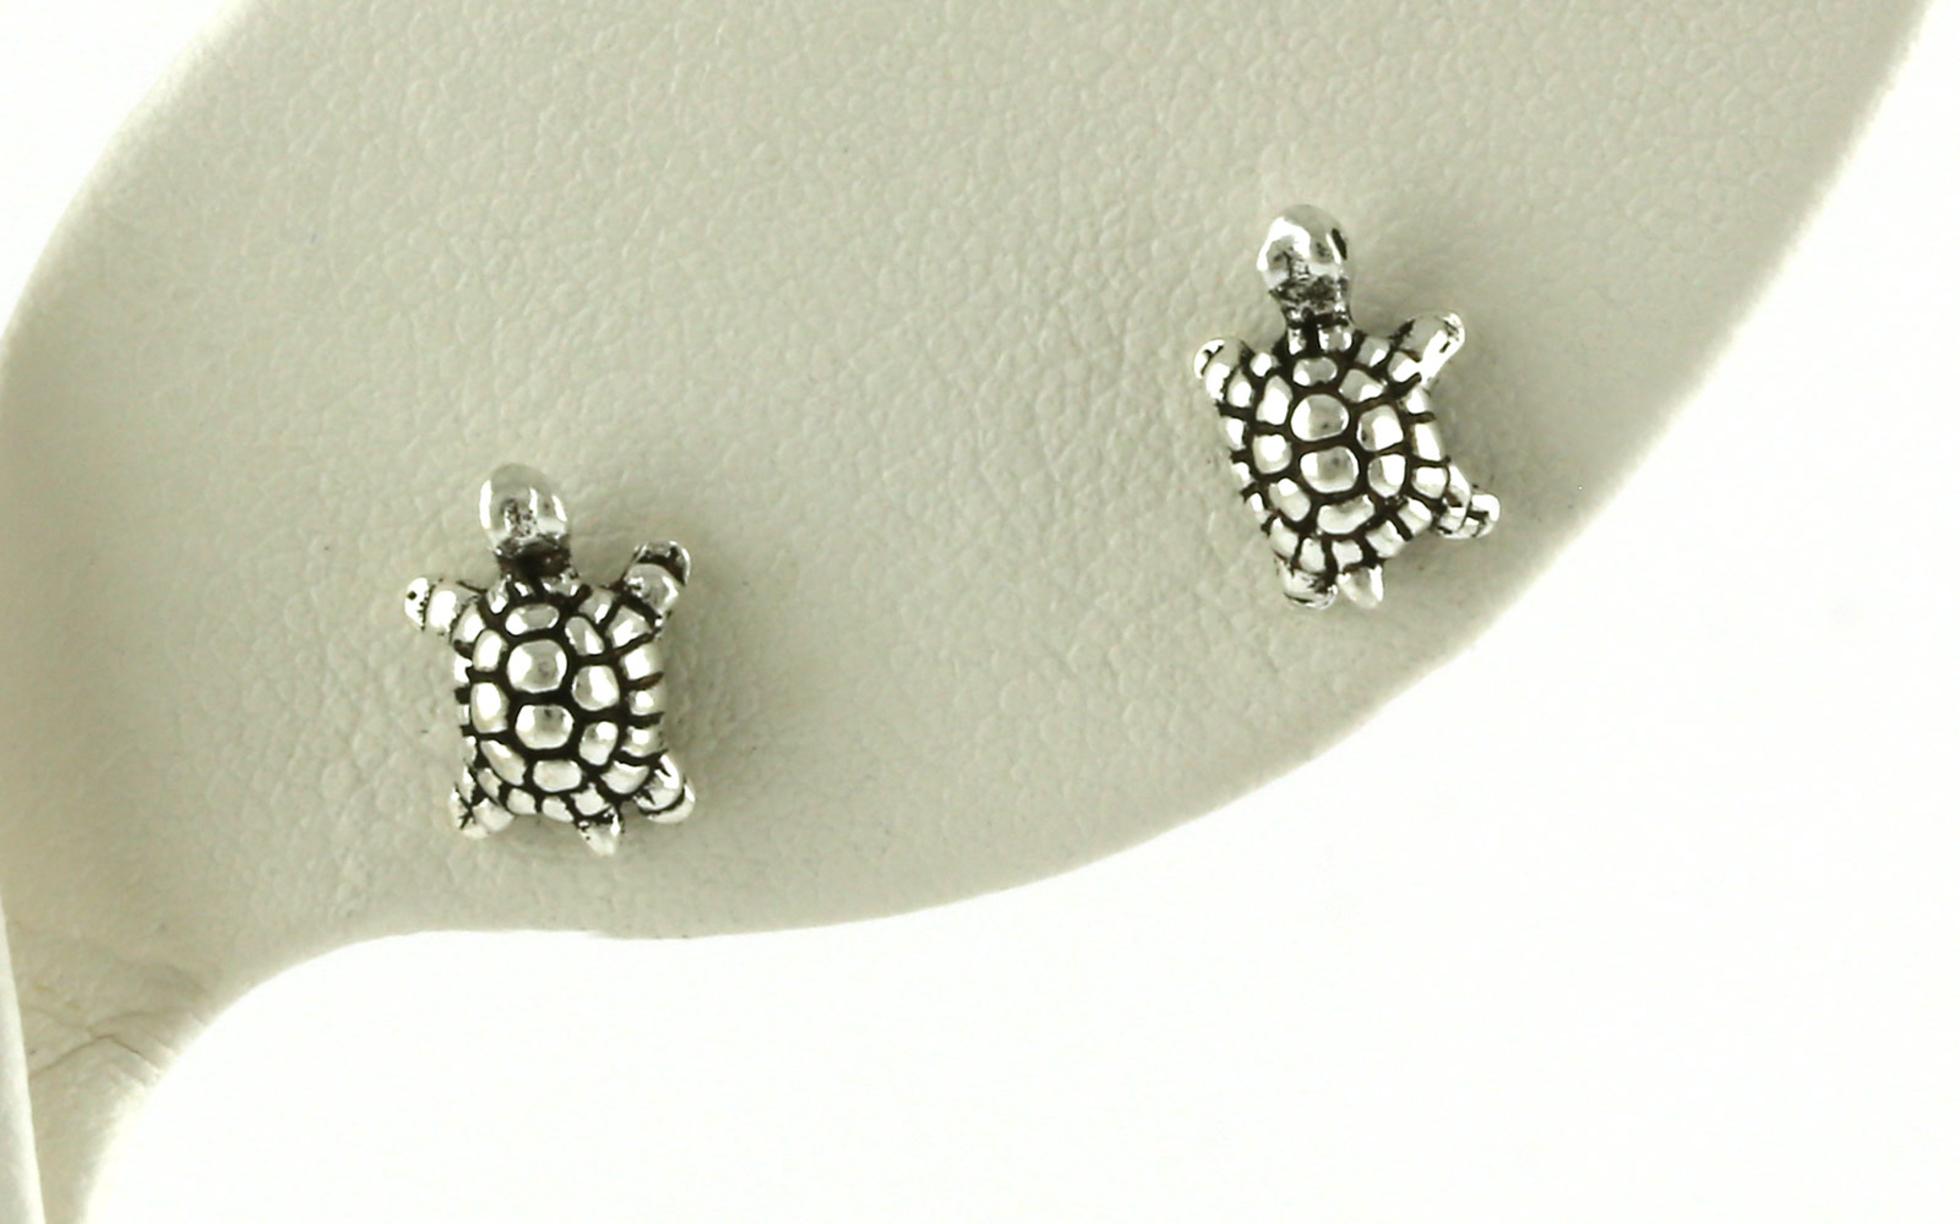 Turtle Stud Earrings in Sterling Silver